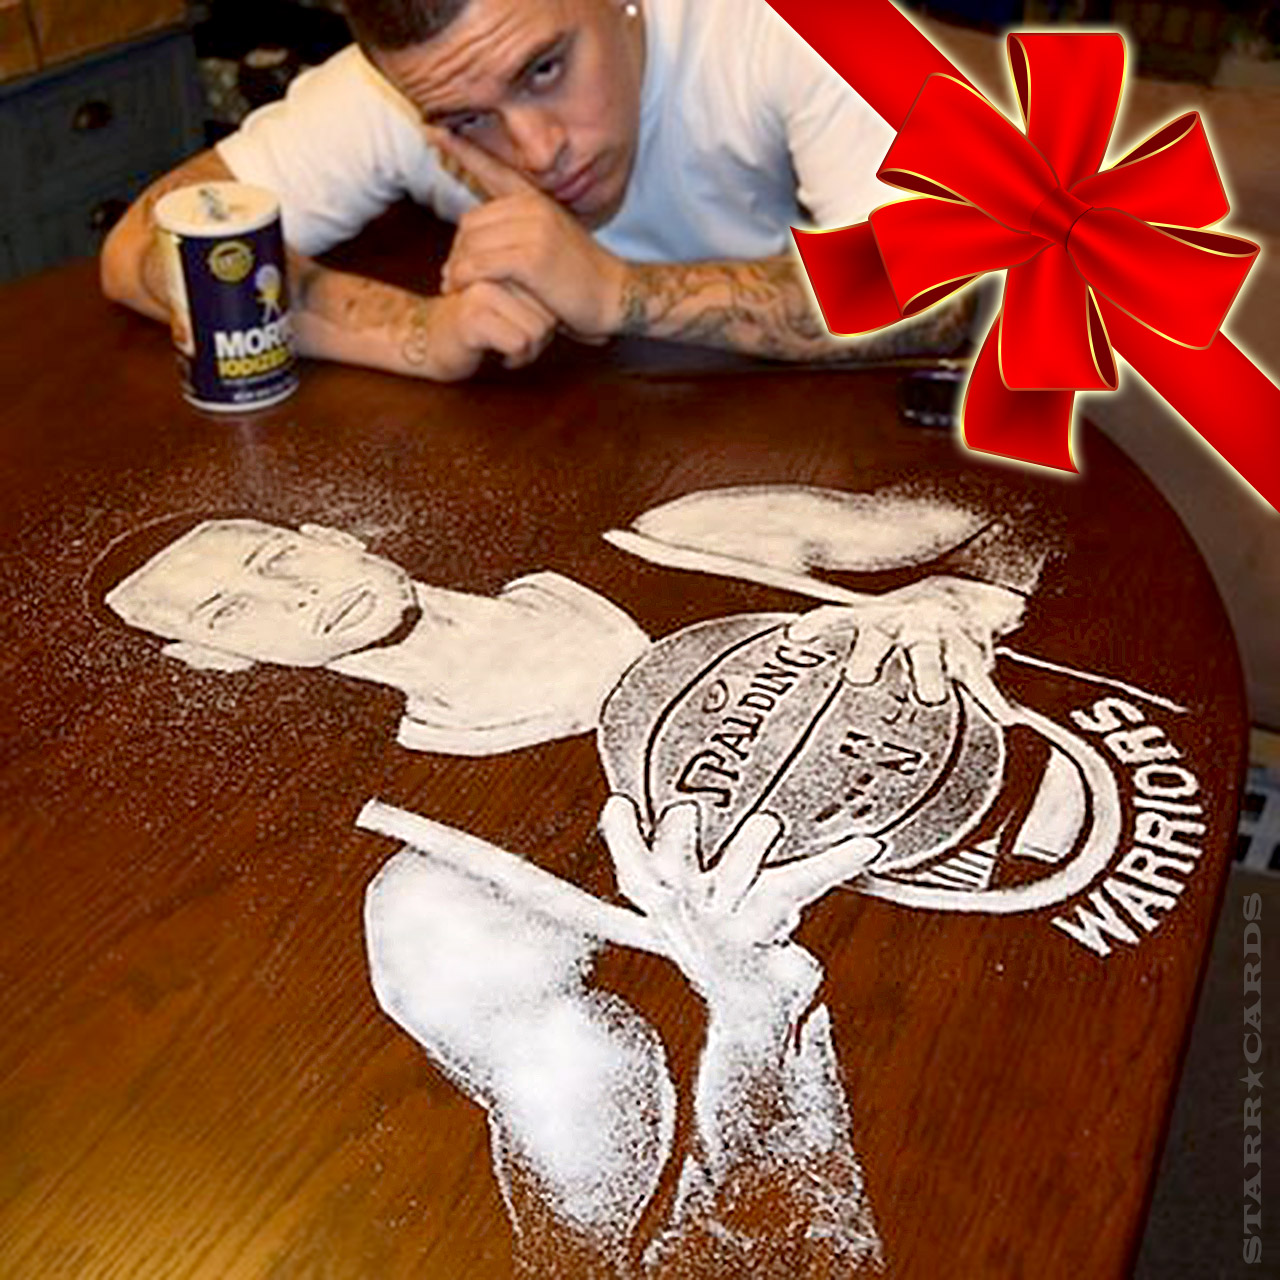 Rob the Original makes Steph Curry in salt art